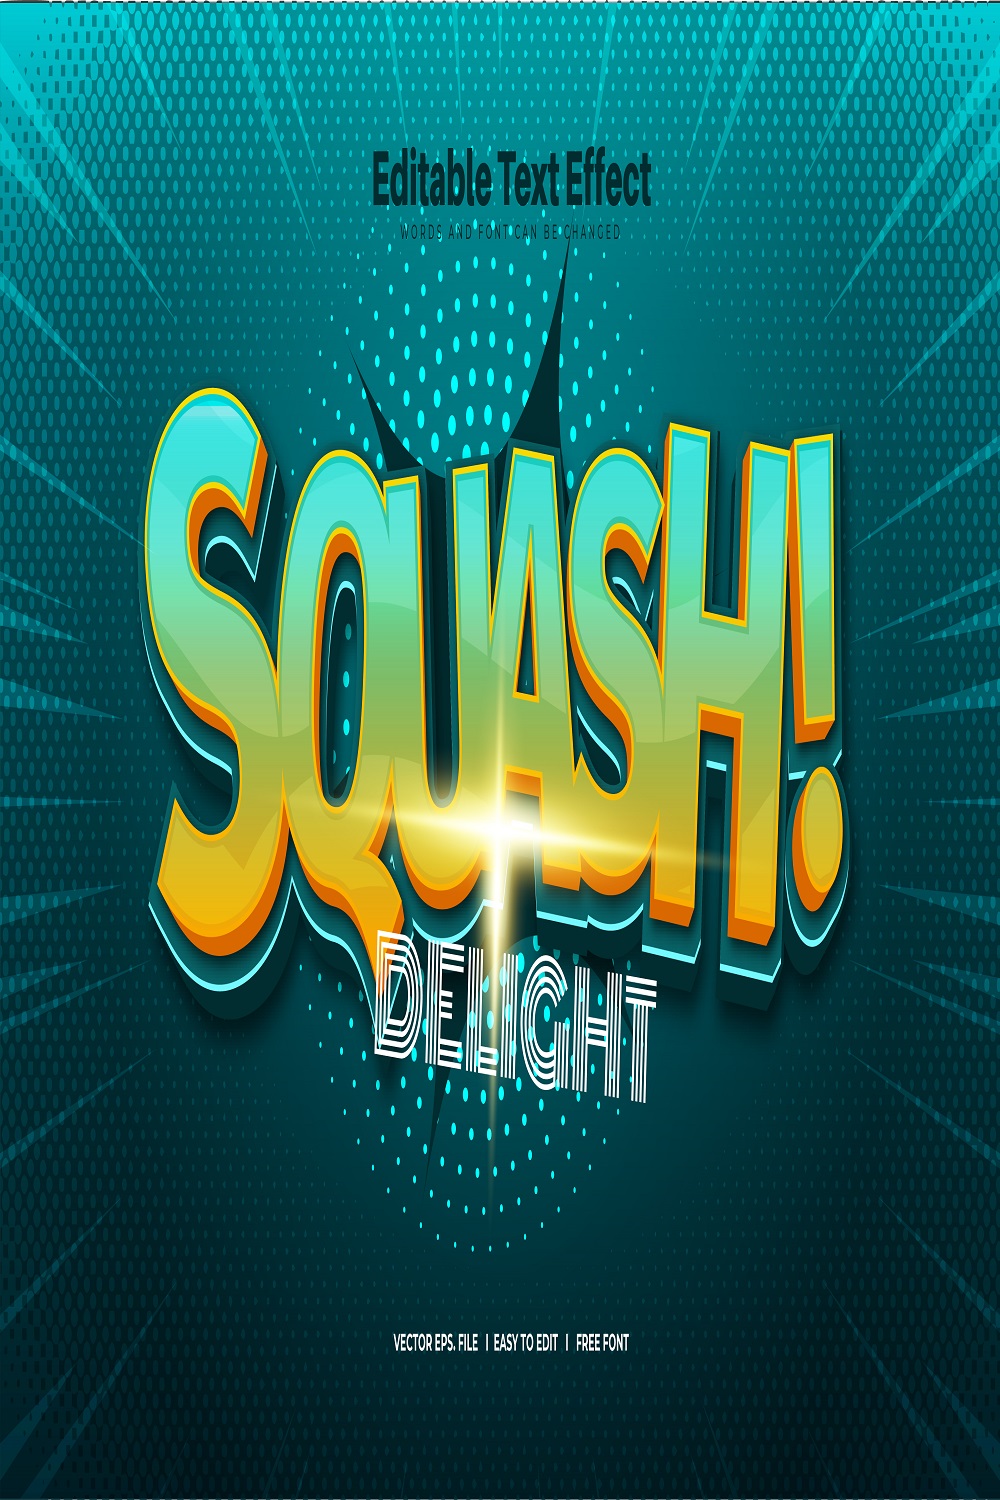 Squash delight text effect pinterest preview image.